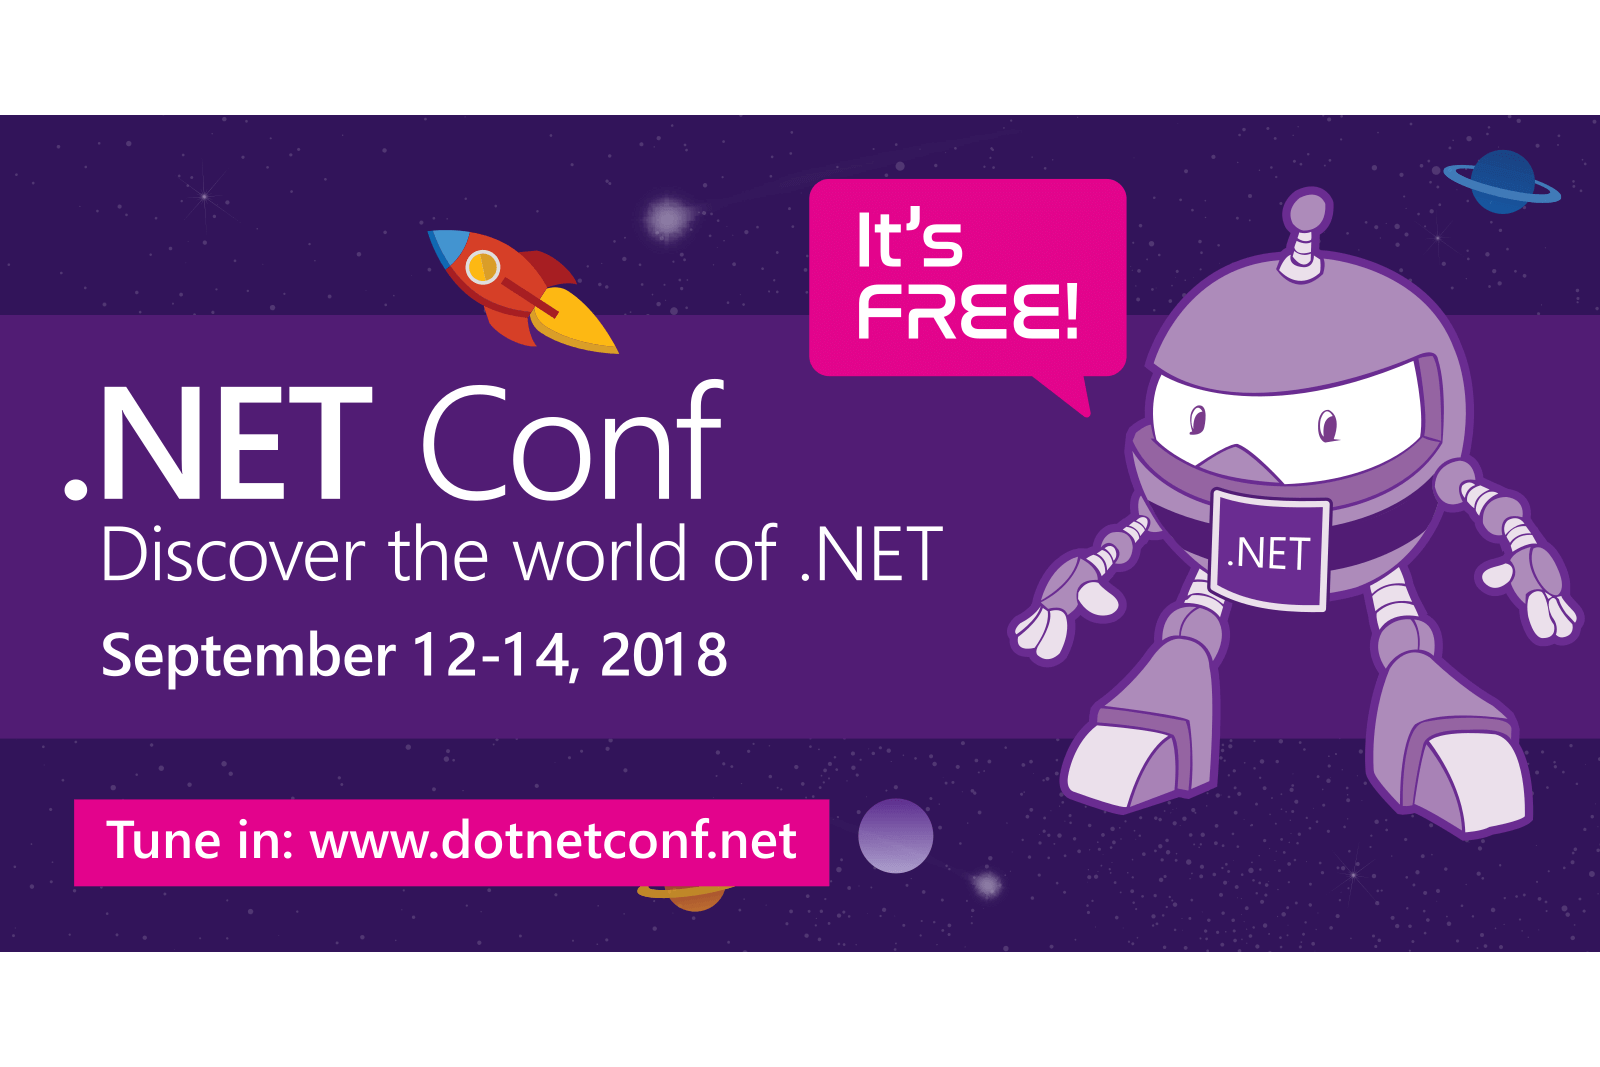 .NET Virtual Conference